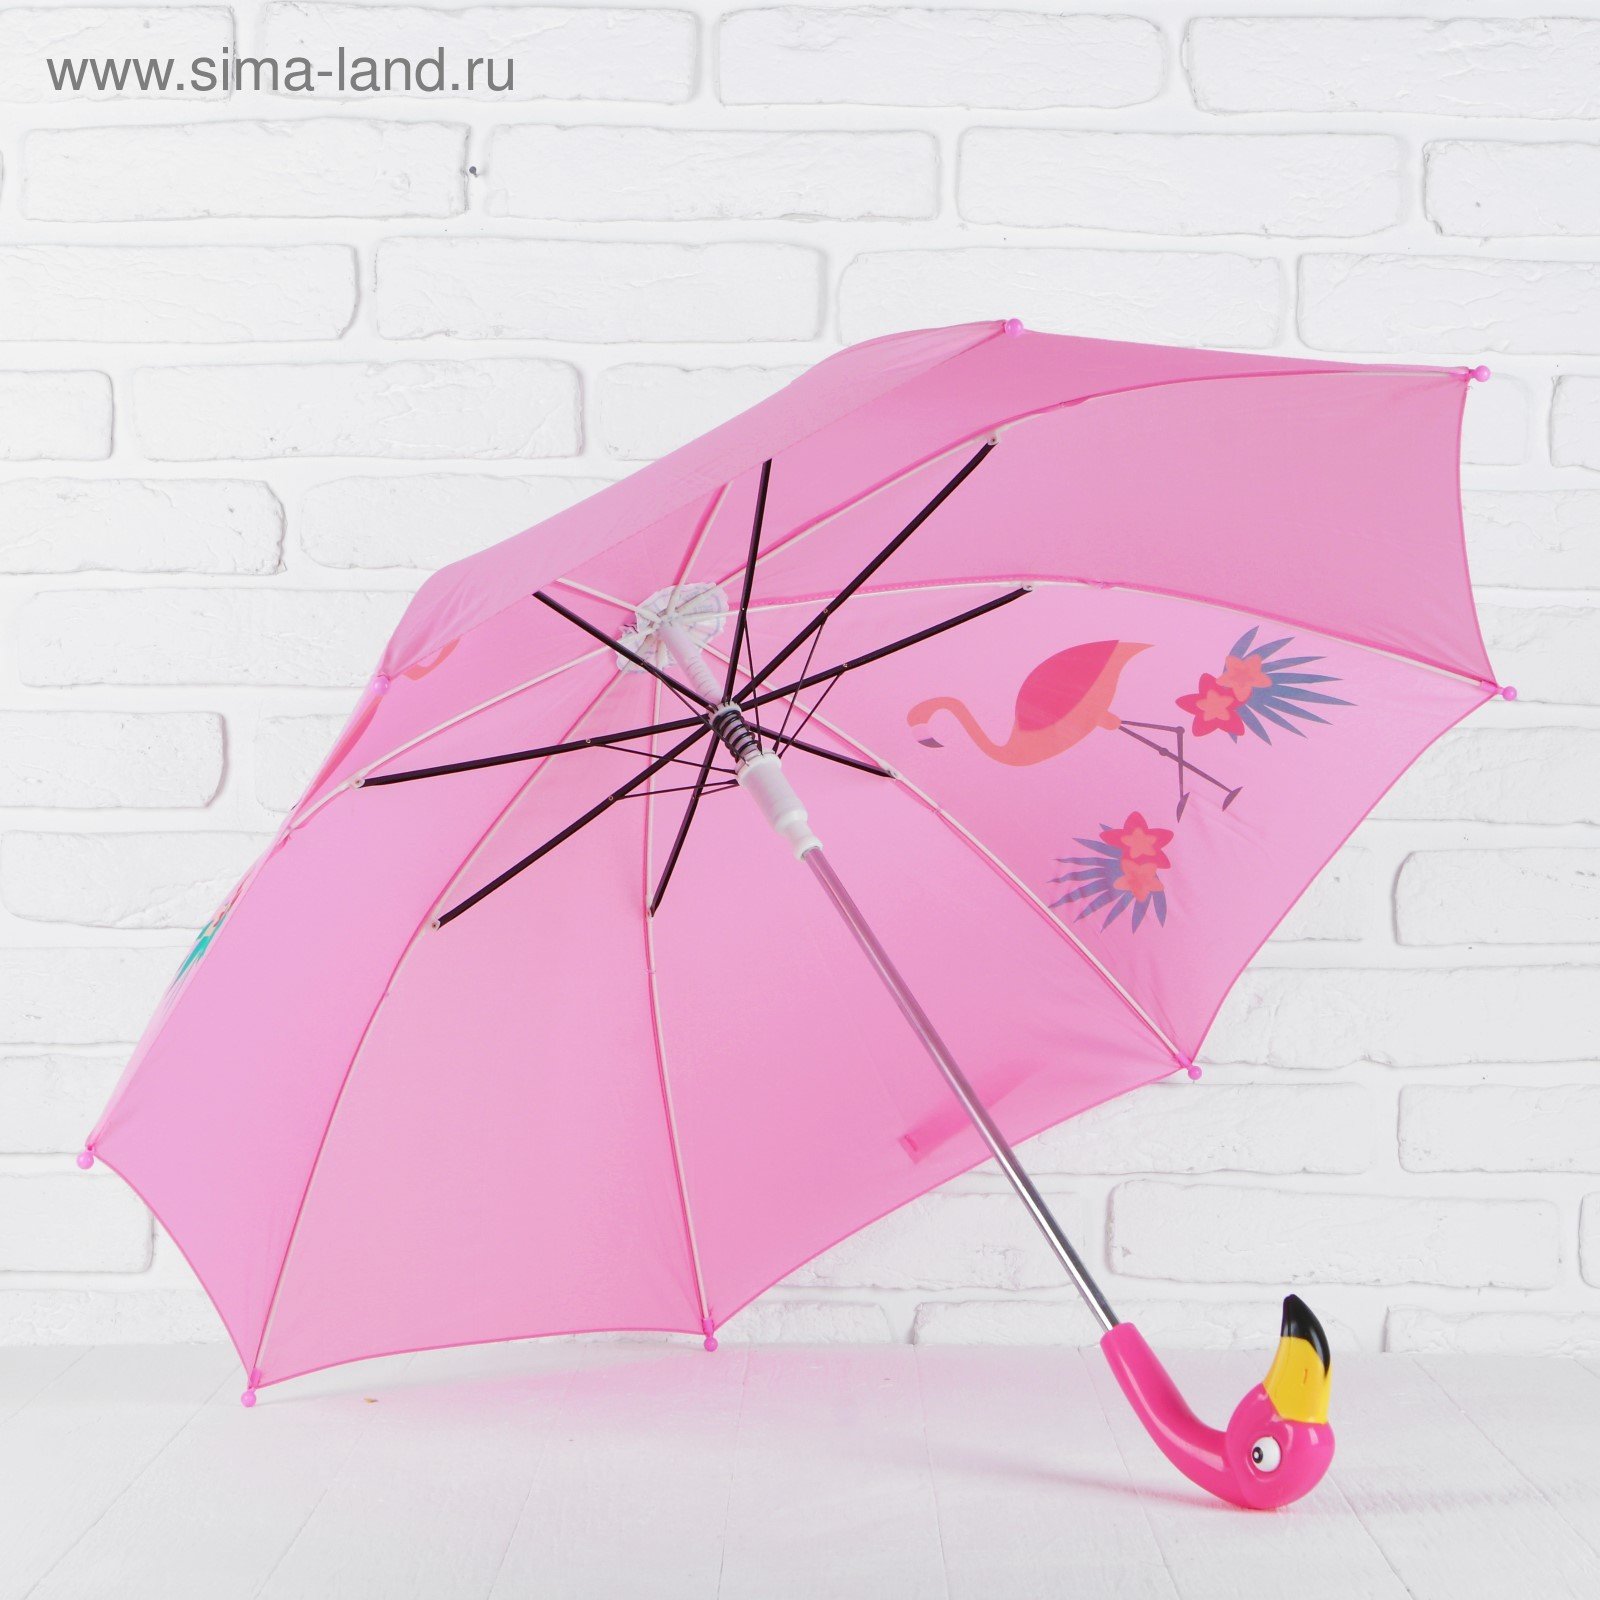 Купить зонтик на озоне. Зонт 19" Фламинго Bondibon 4434. Зонт розовый Фламинго. Детский зонтик. Детский зонтик для девочки.